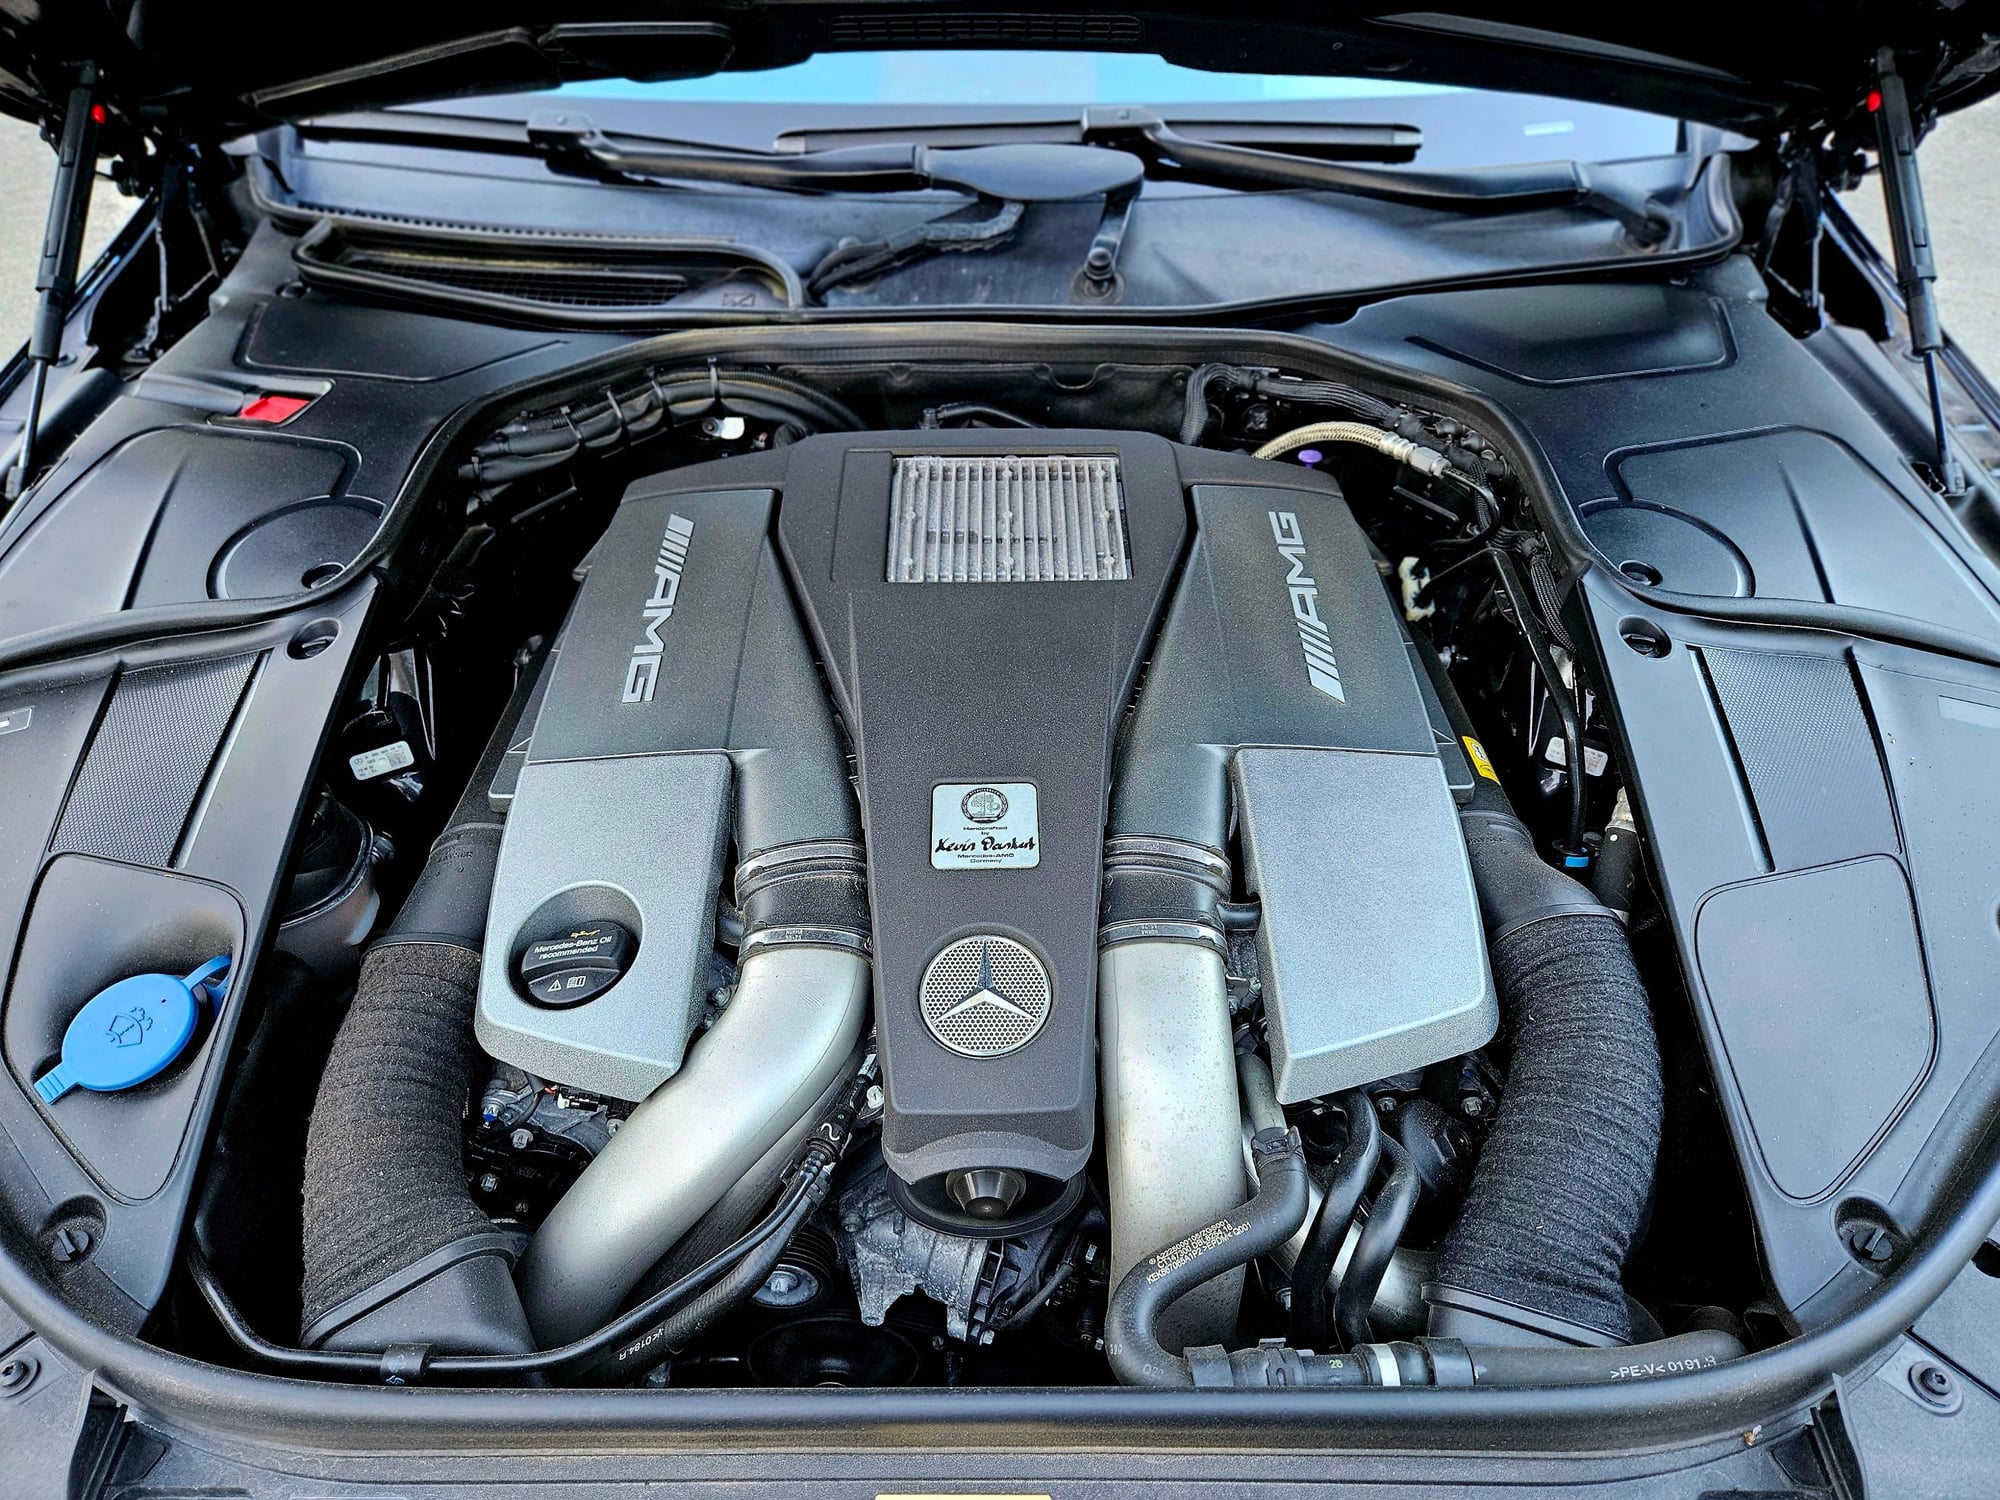 2016 Mercedes-Benz S63 AMG - Black on Black Beauty - Used - VIN WDDUG7JB3GA218045 - 44,000 Miles - 8 cyl - AWD - Automatic - Sedan - Black - Durango, CO 81301, United States